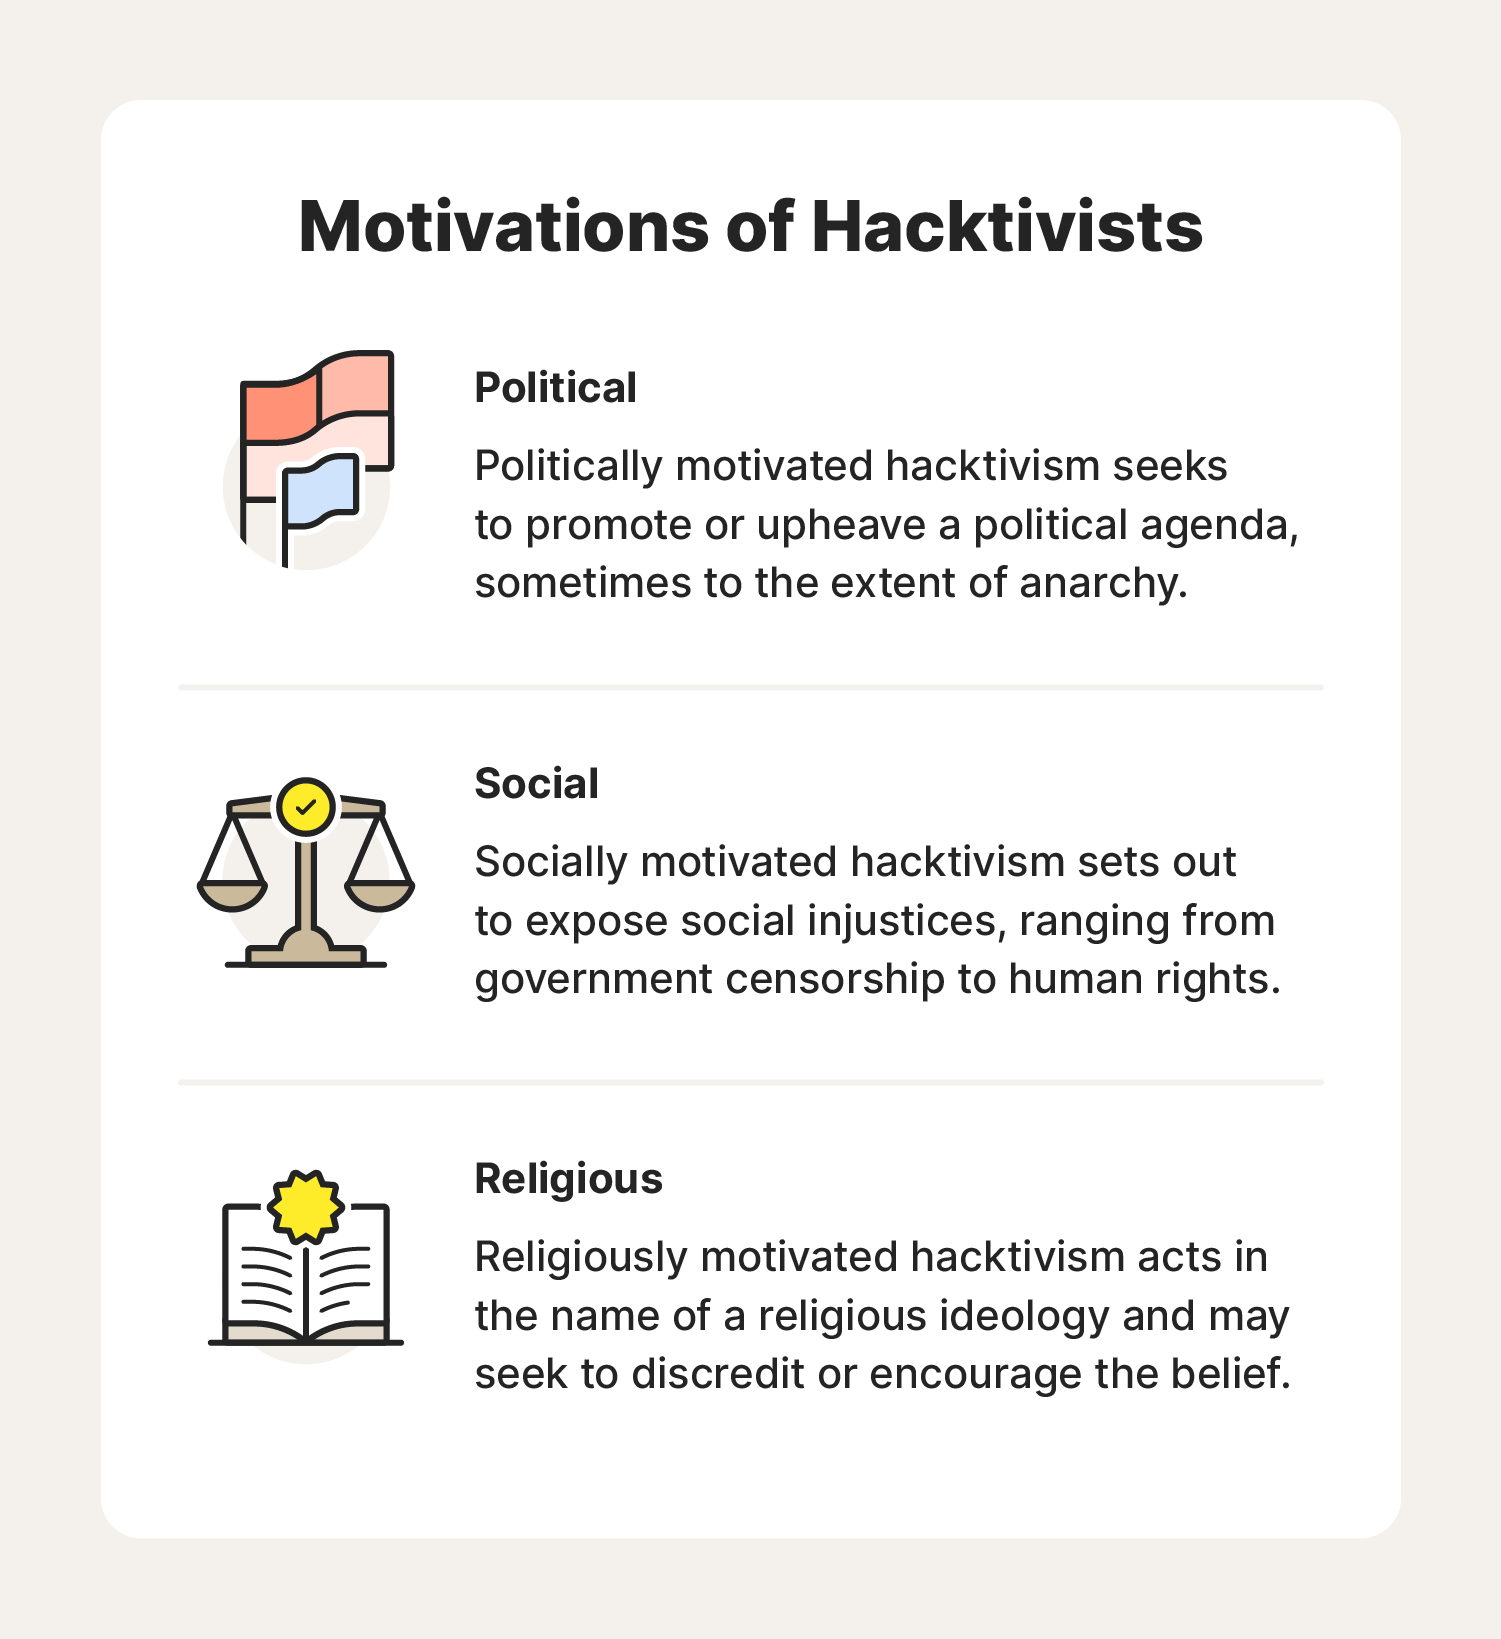 A graphic explains the common motivations behind hacktivism.